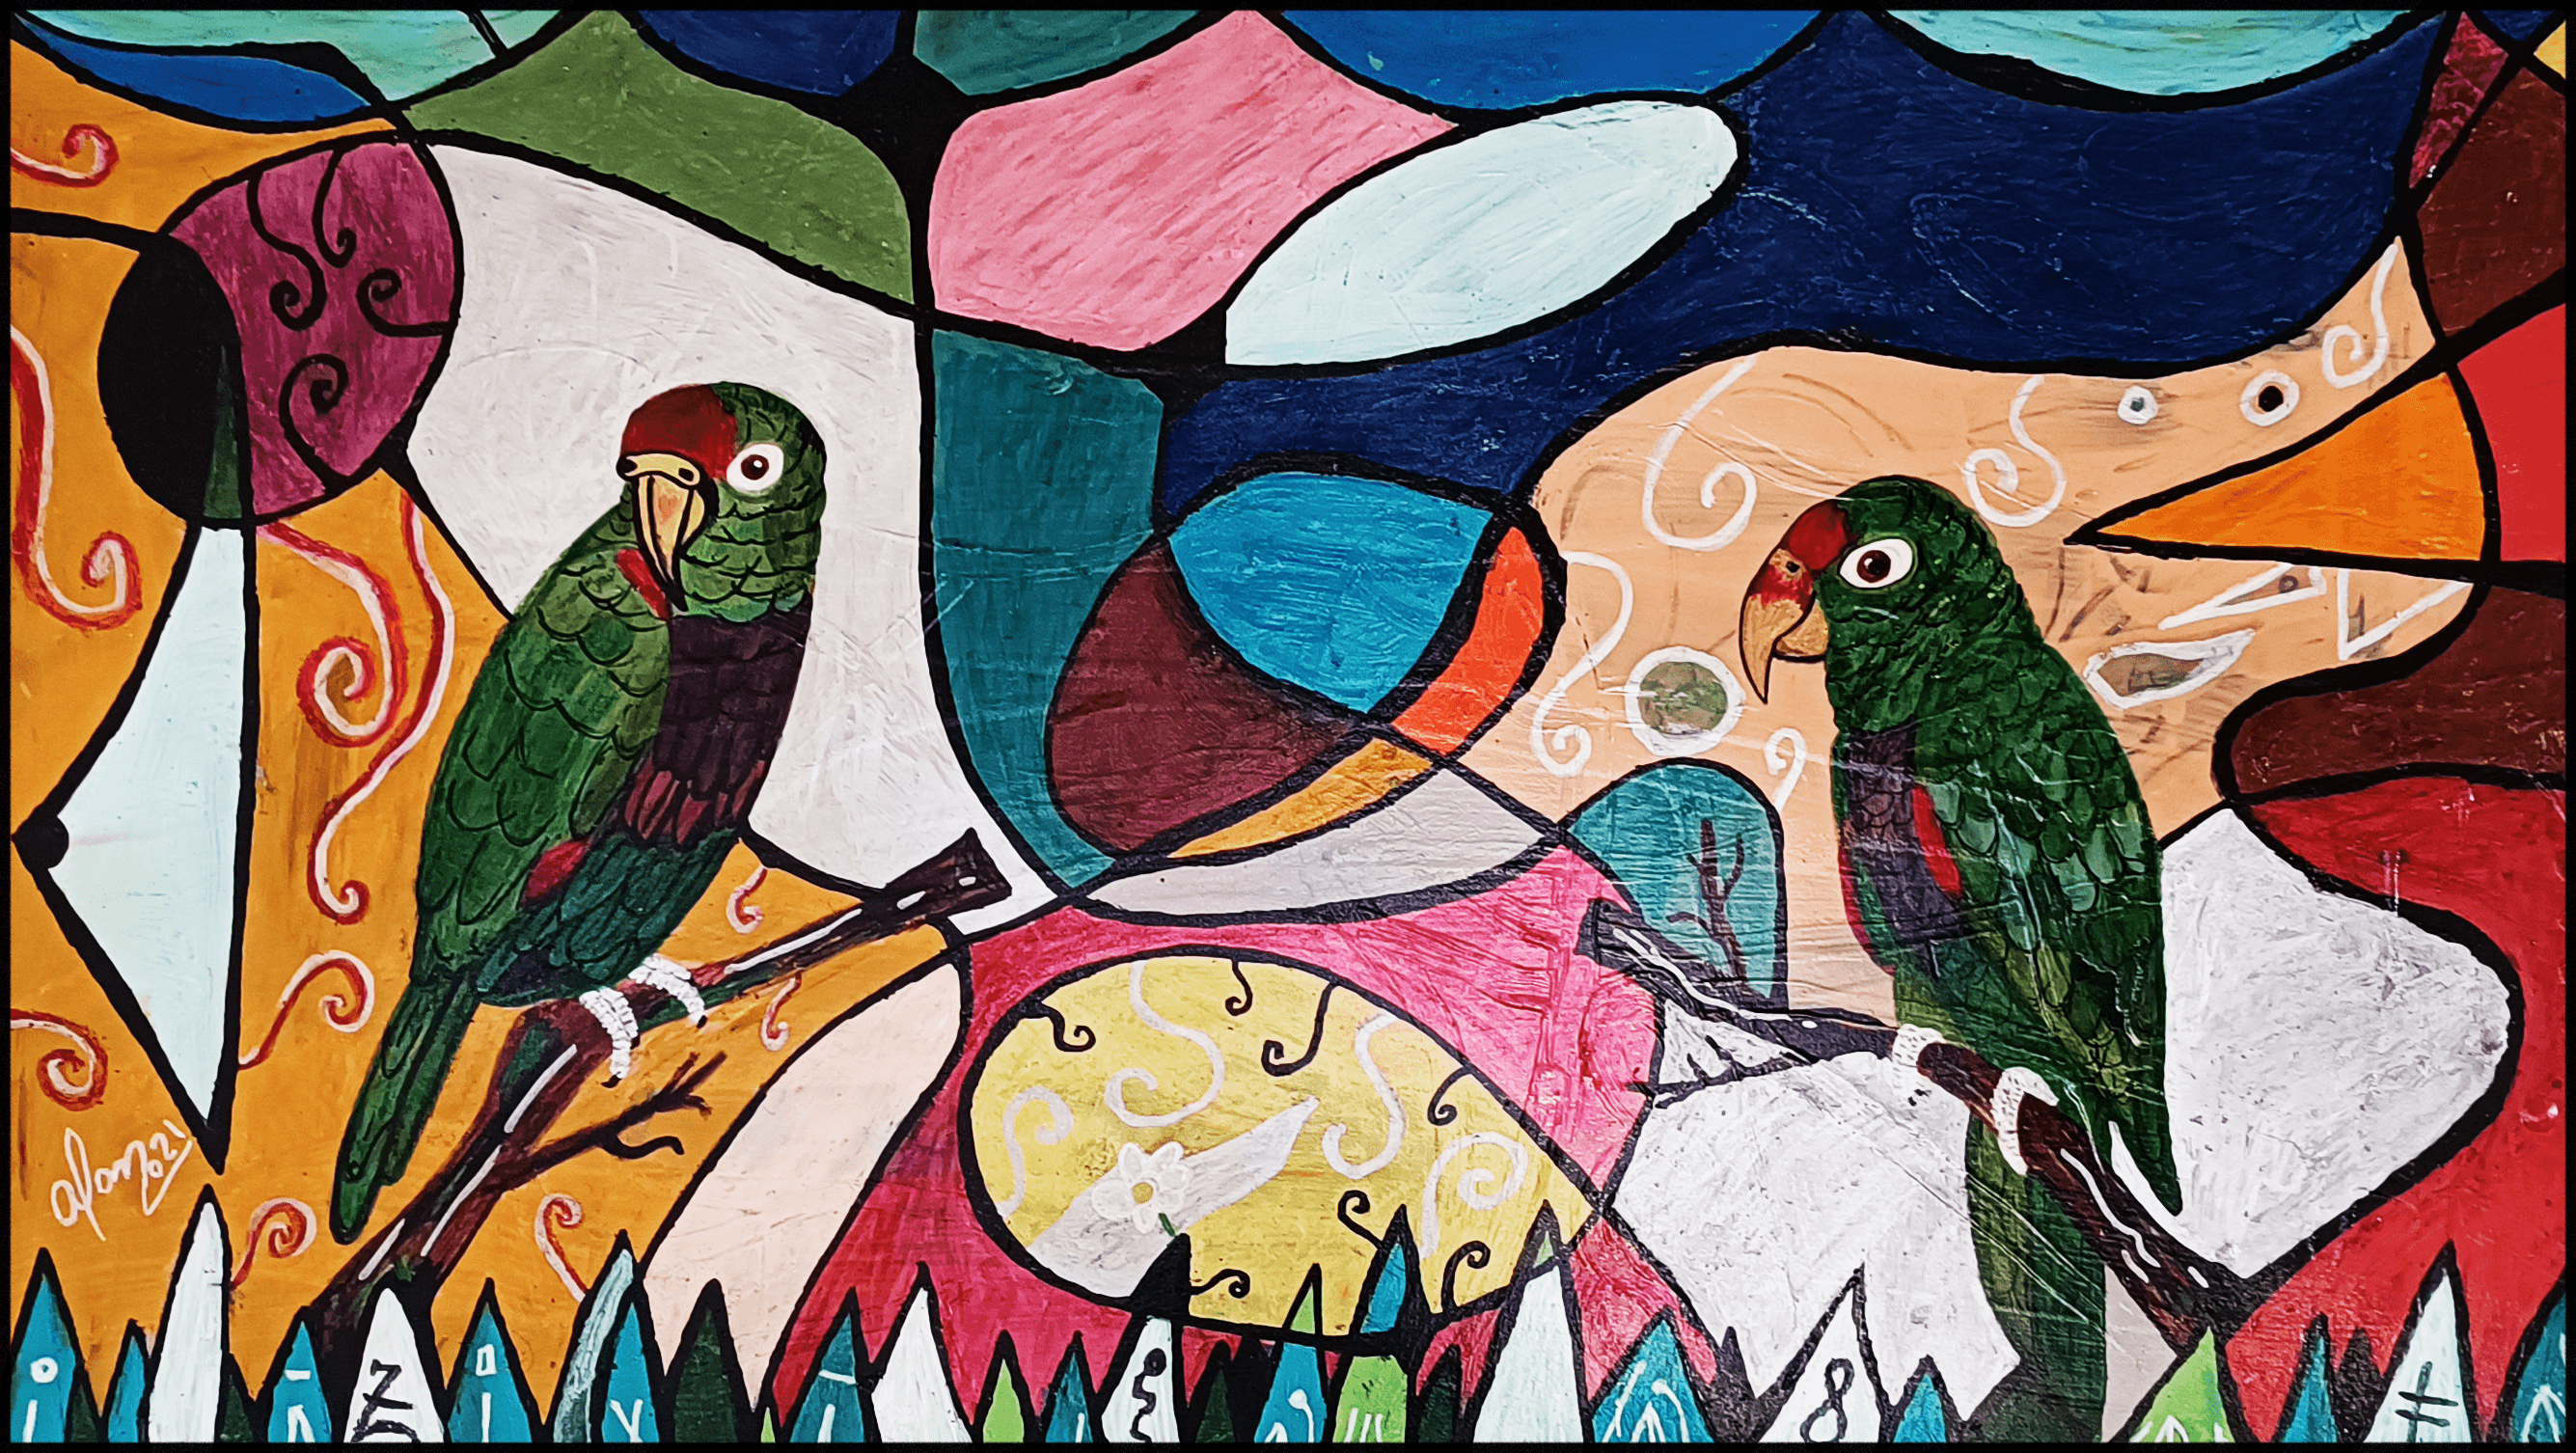 Papagaio de peito roxo - (Fragmented Nature #021) by Alan Suassuna